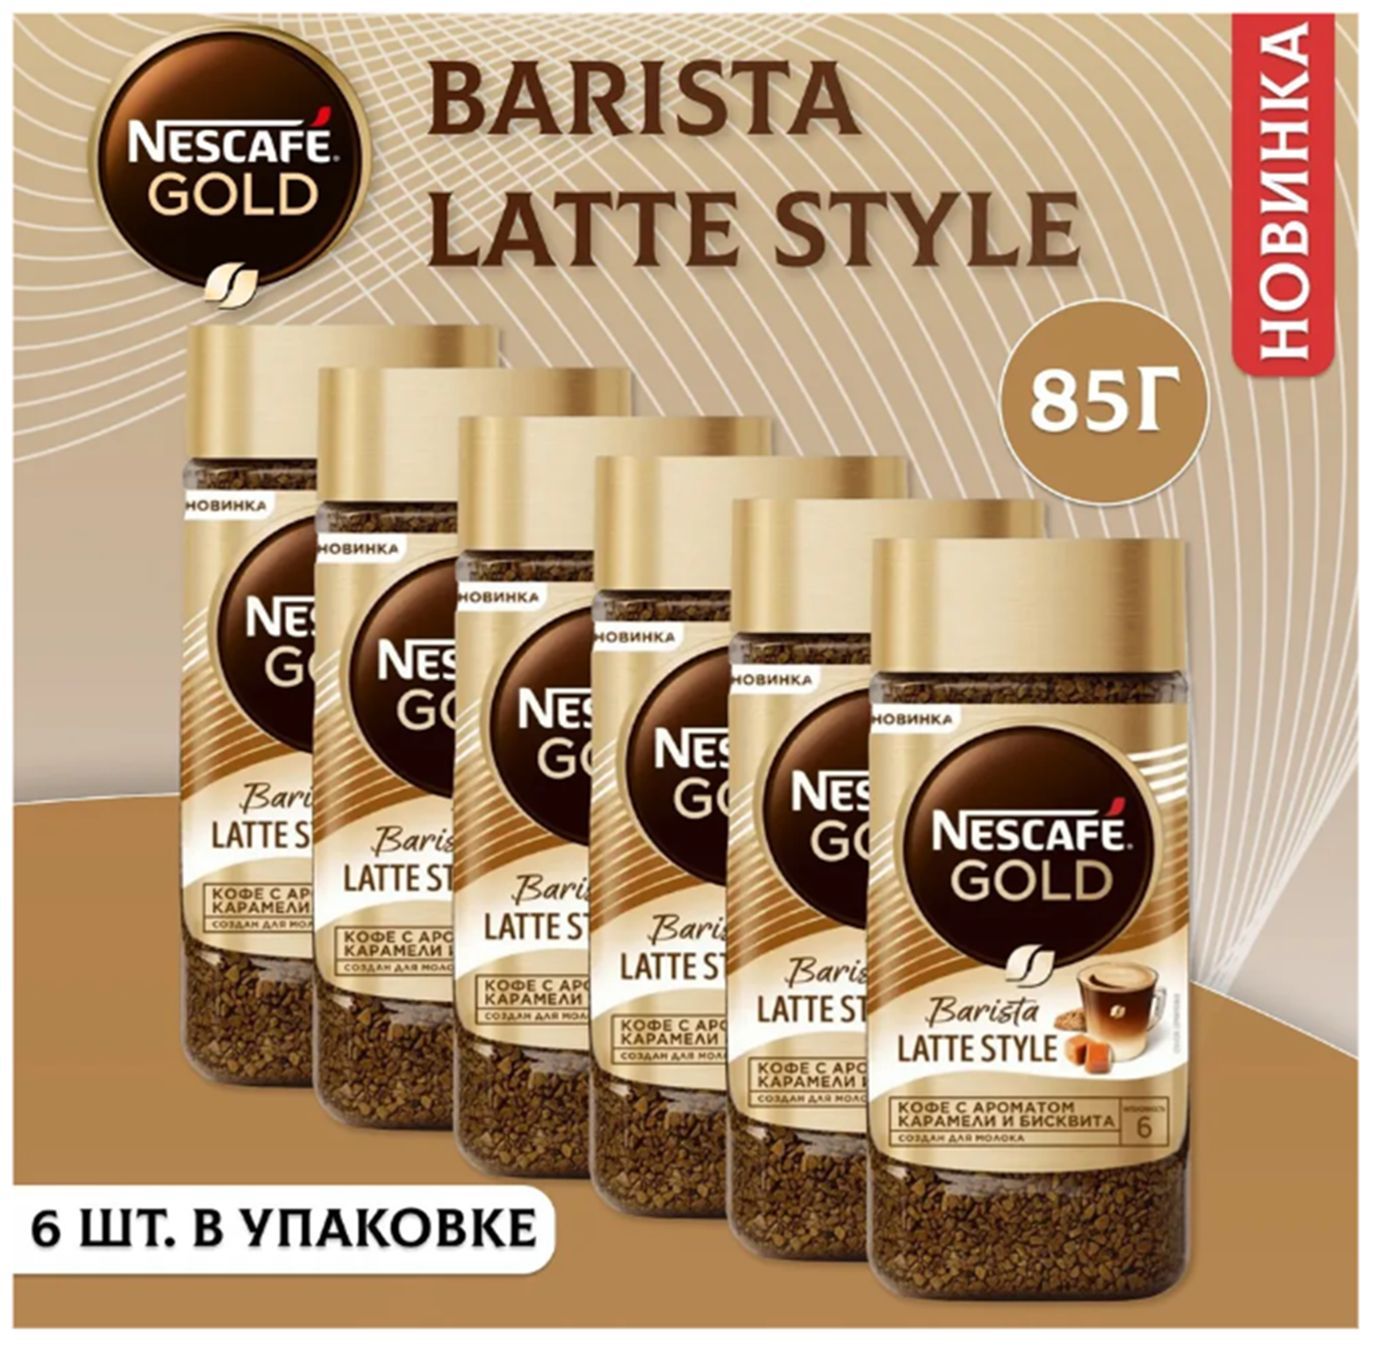 Нескафе бариста латте. Nescafe Barista Latte Style. Молоко латте бариста. Кофе Edition Gold. Nescafe gold barista style